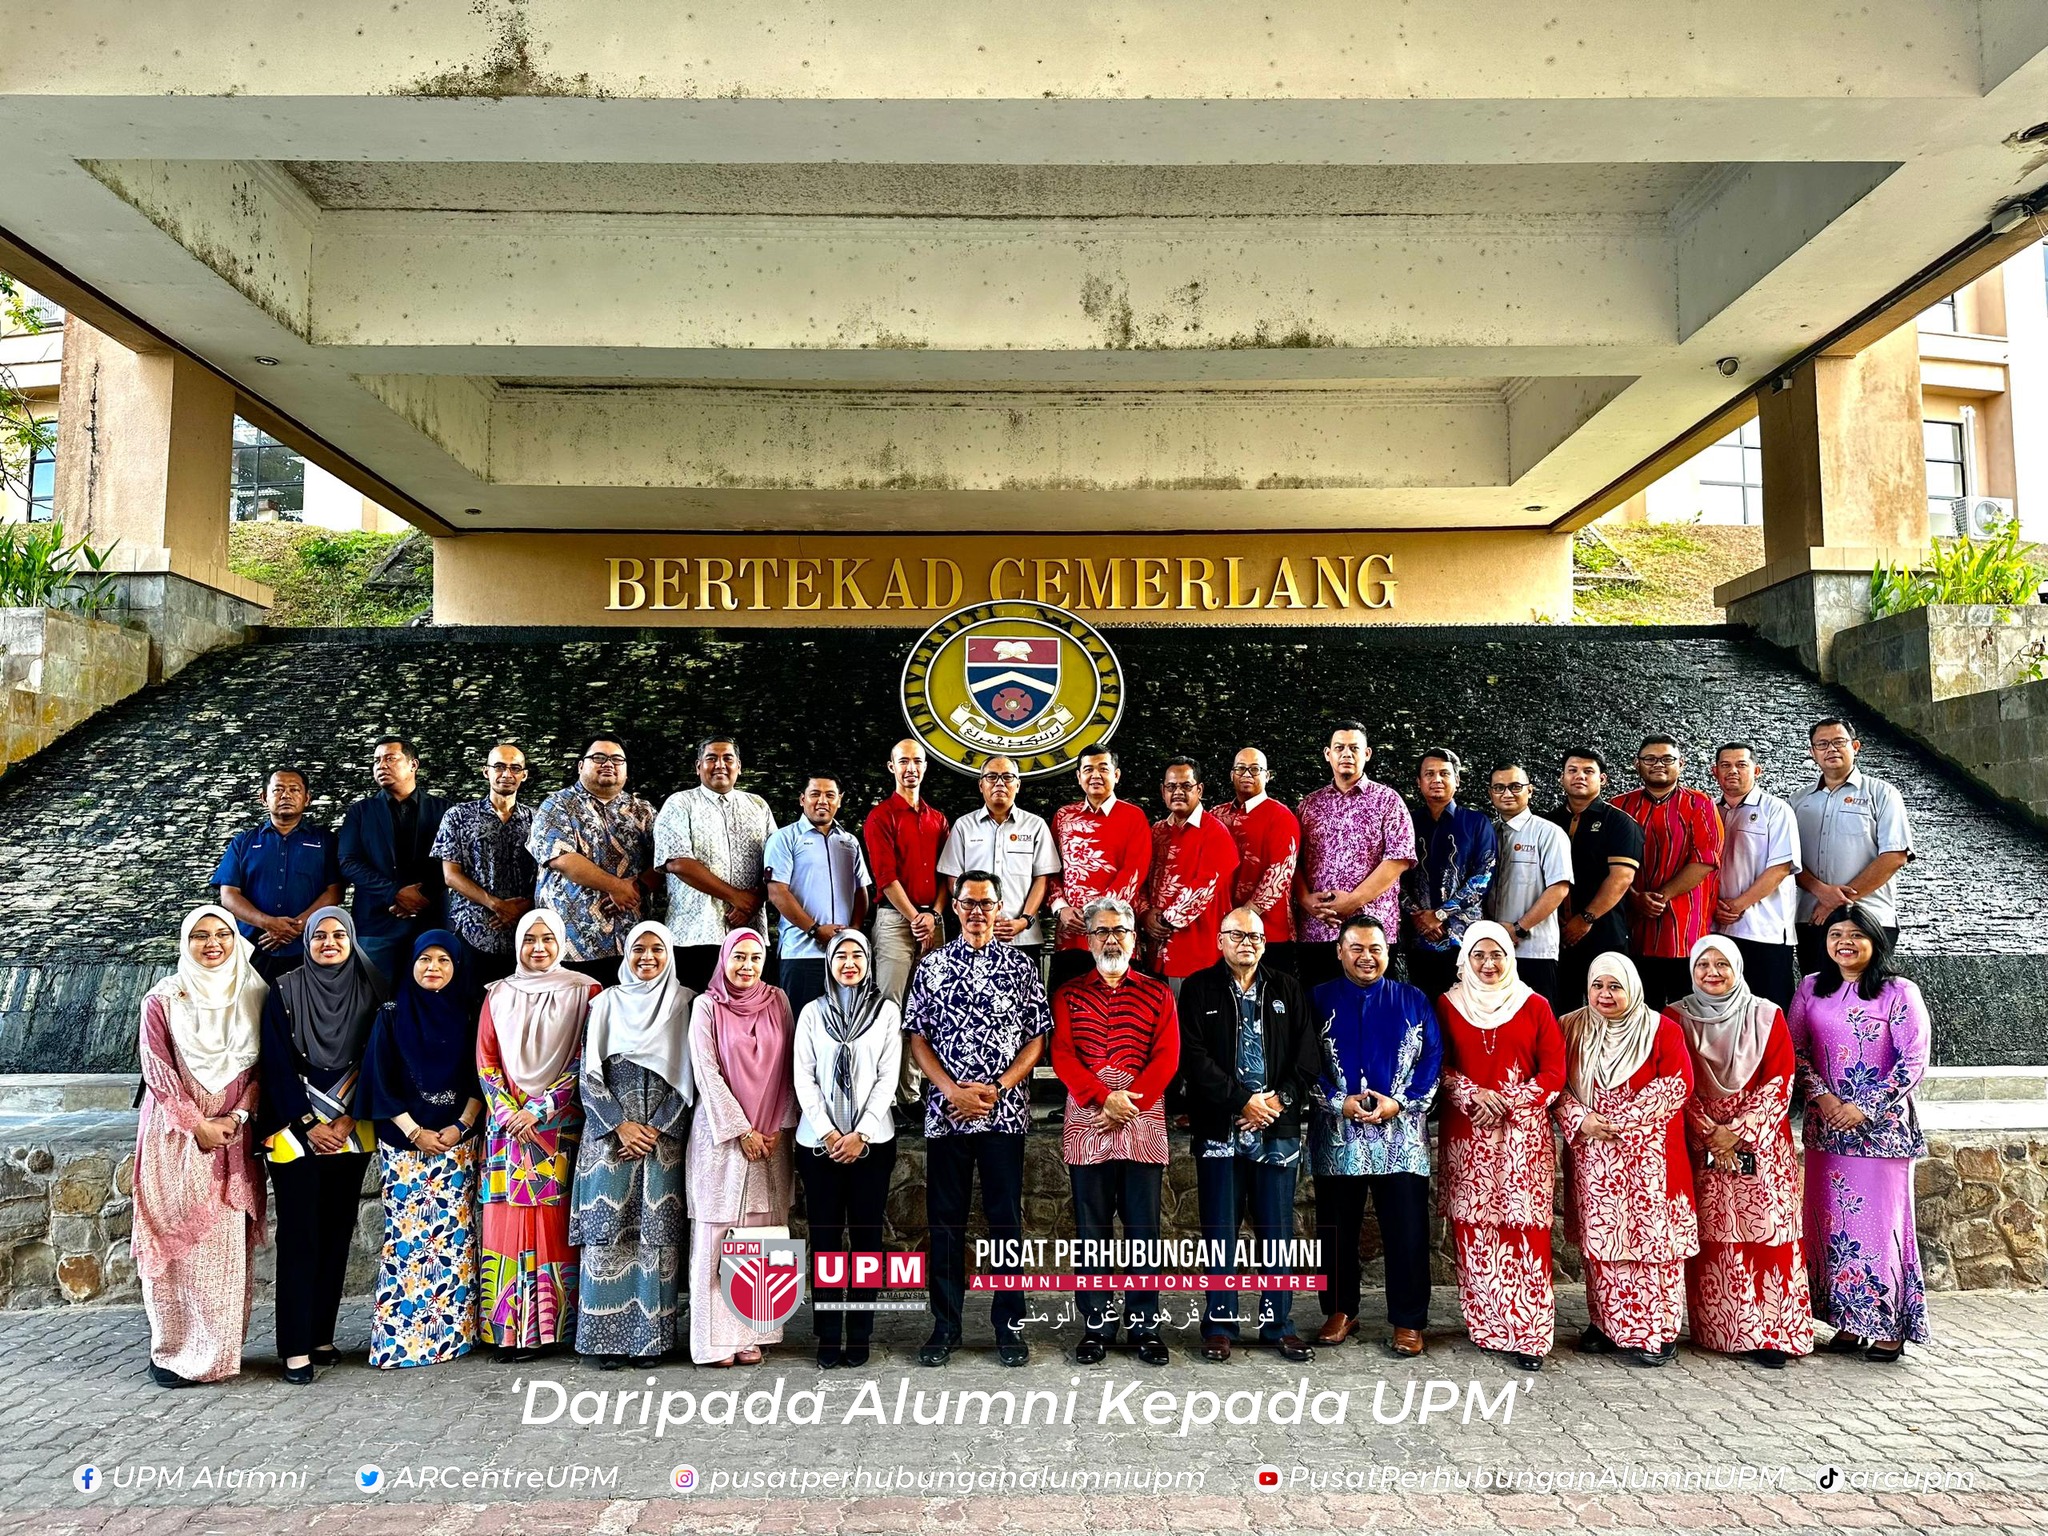 Workshop of the Public University Alumni Council (MAlumni) at Universiti Malaysia Sabah (UMS)